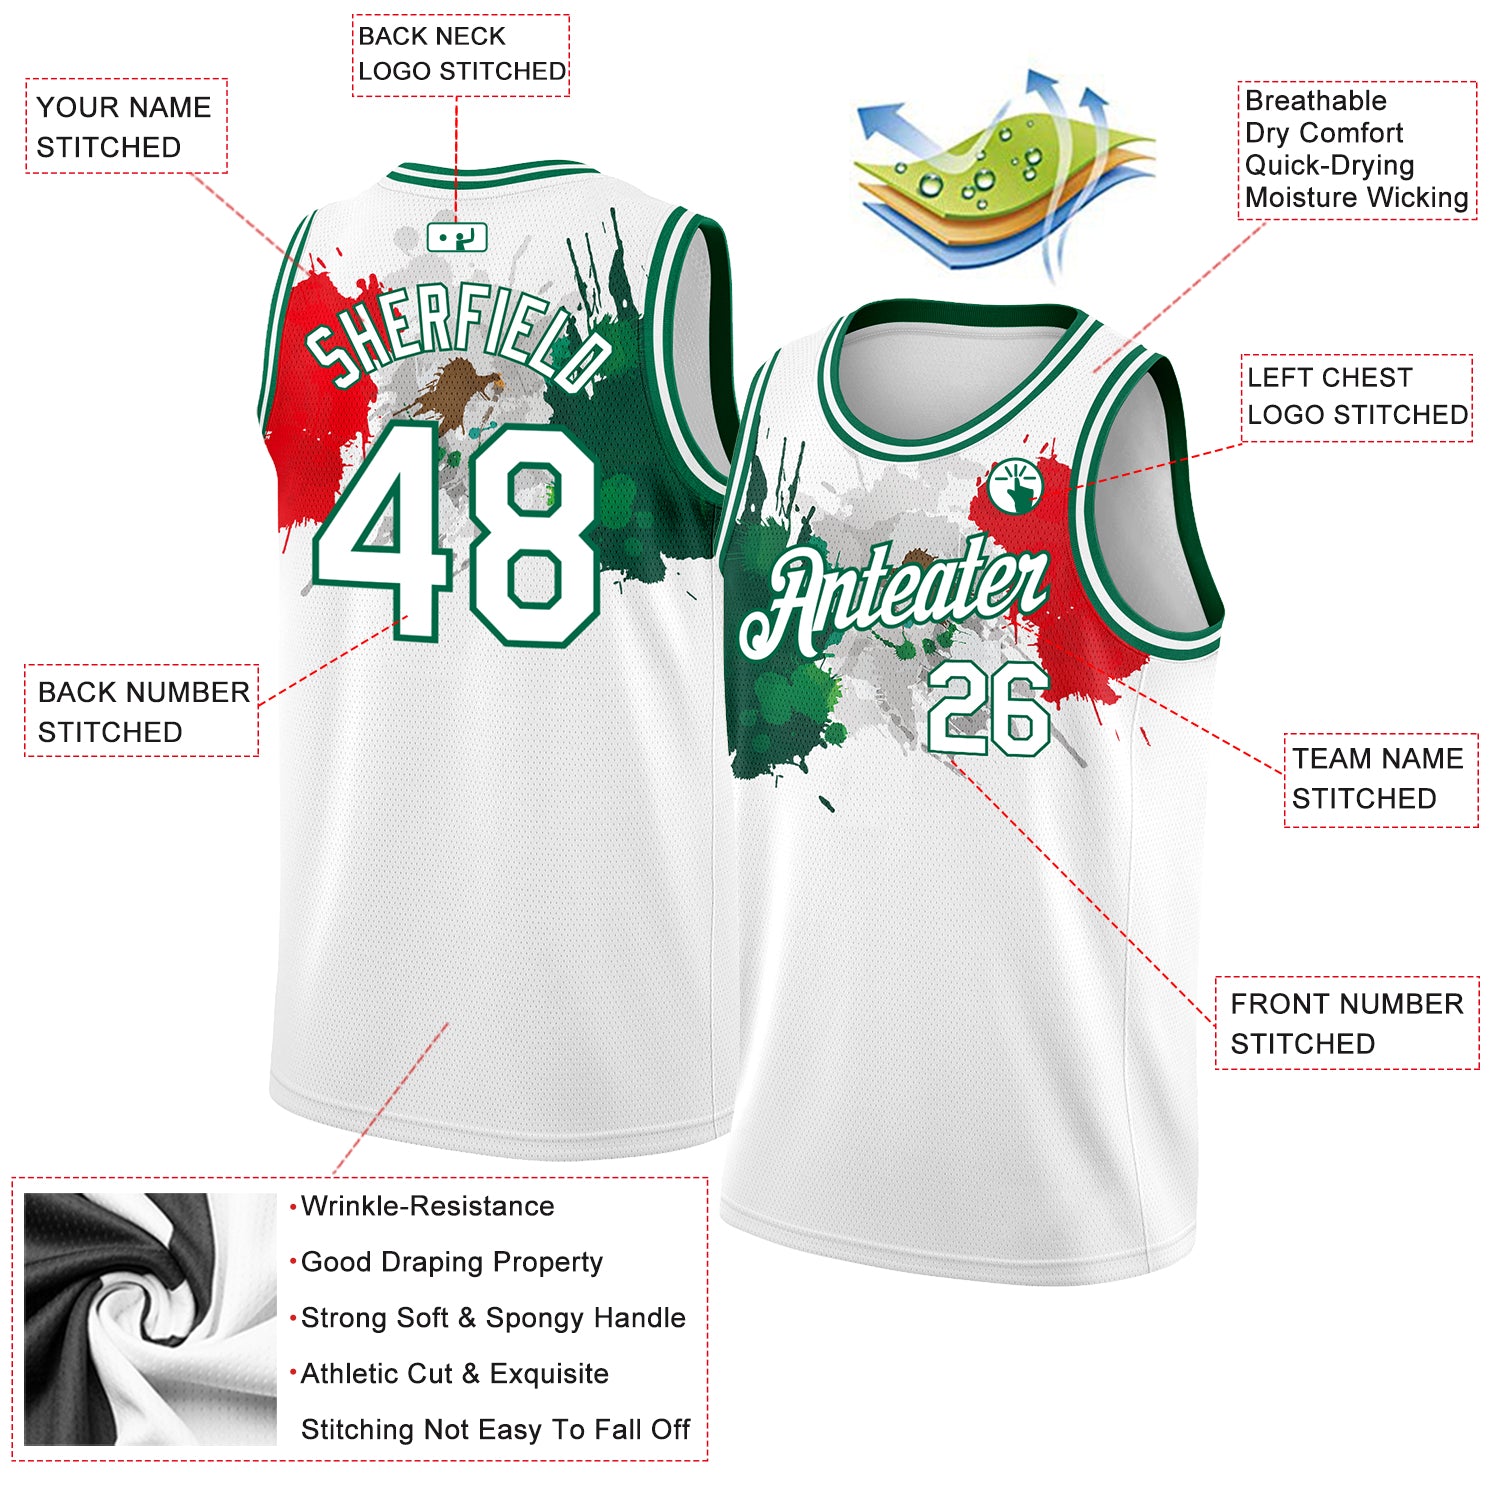 FANSIDEA Custom Basketball Jersey White Grass Green Round Neck Sublimation Basketball Suit Jersey Men's Size:XL